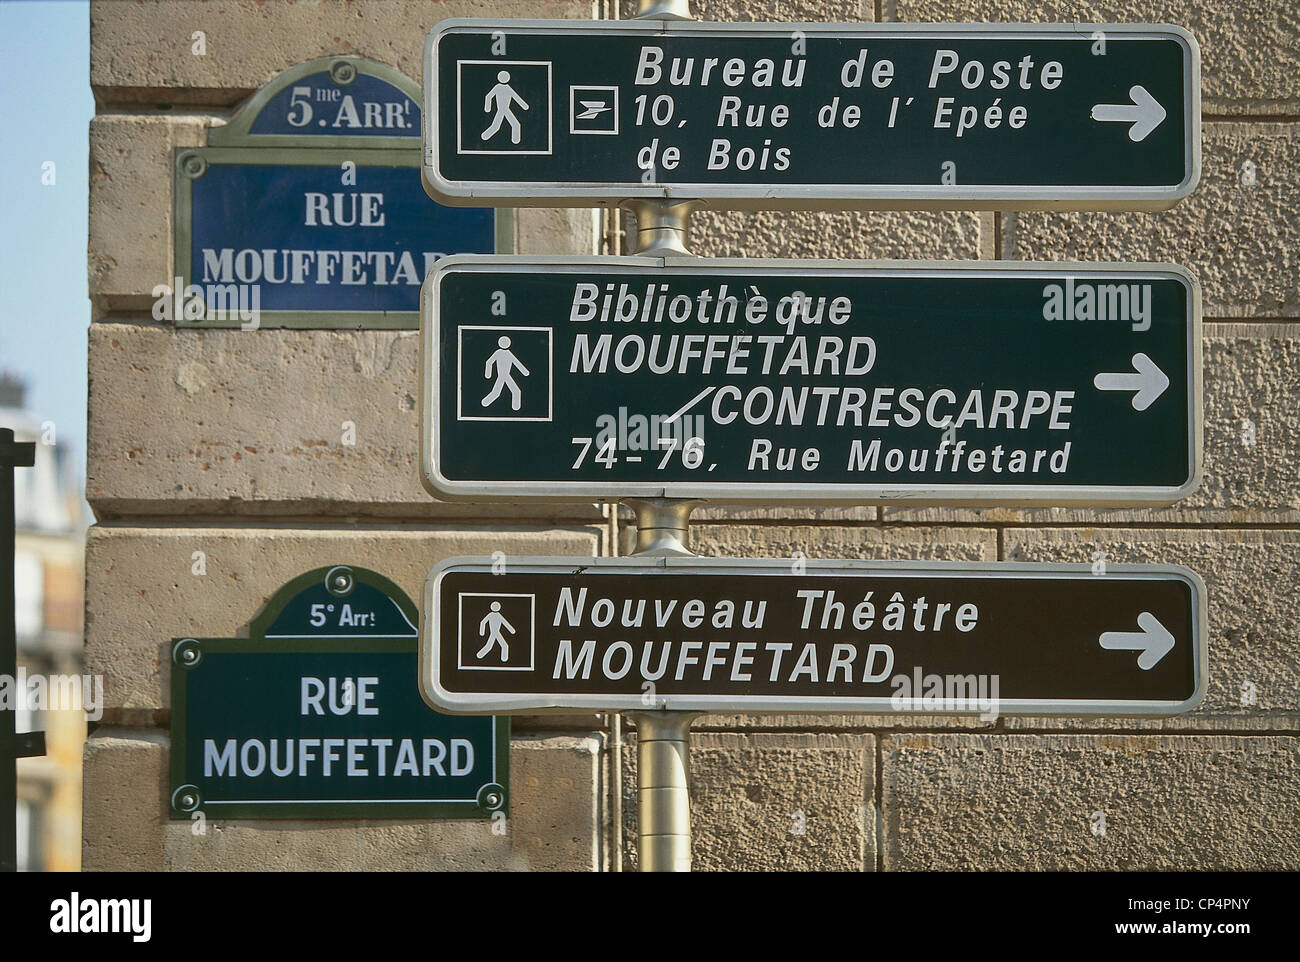 France - Ile-de-France - Paris. Road signs in rue Mouffetard Stock Photo